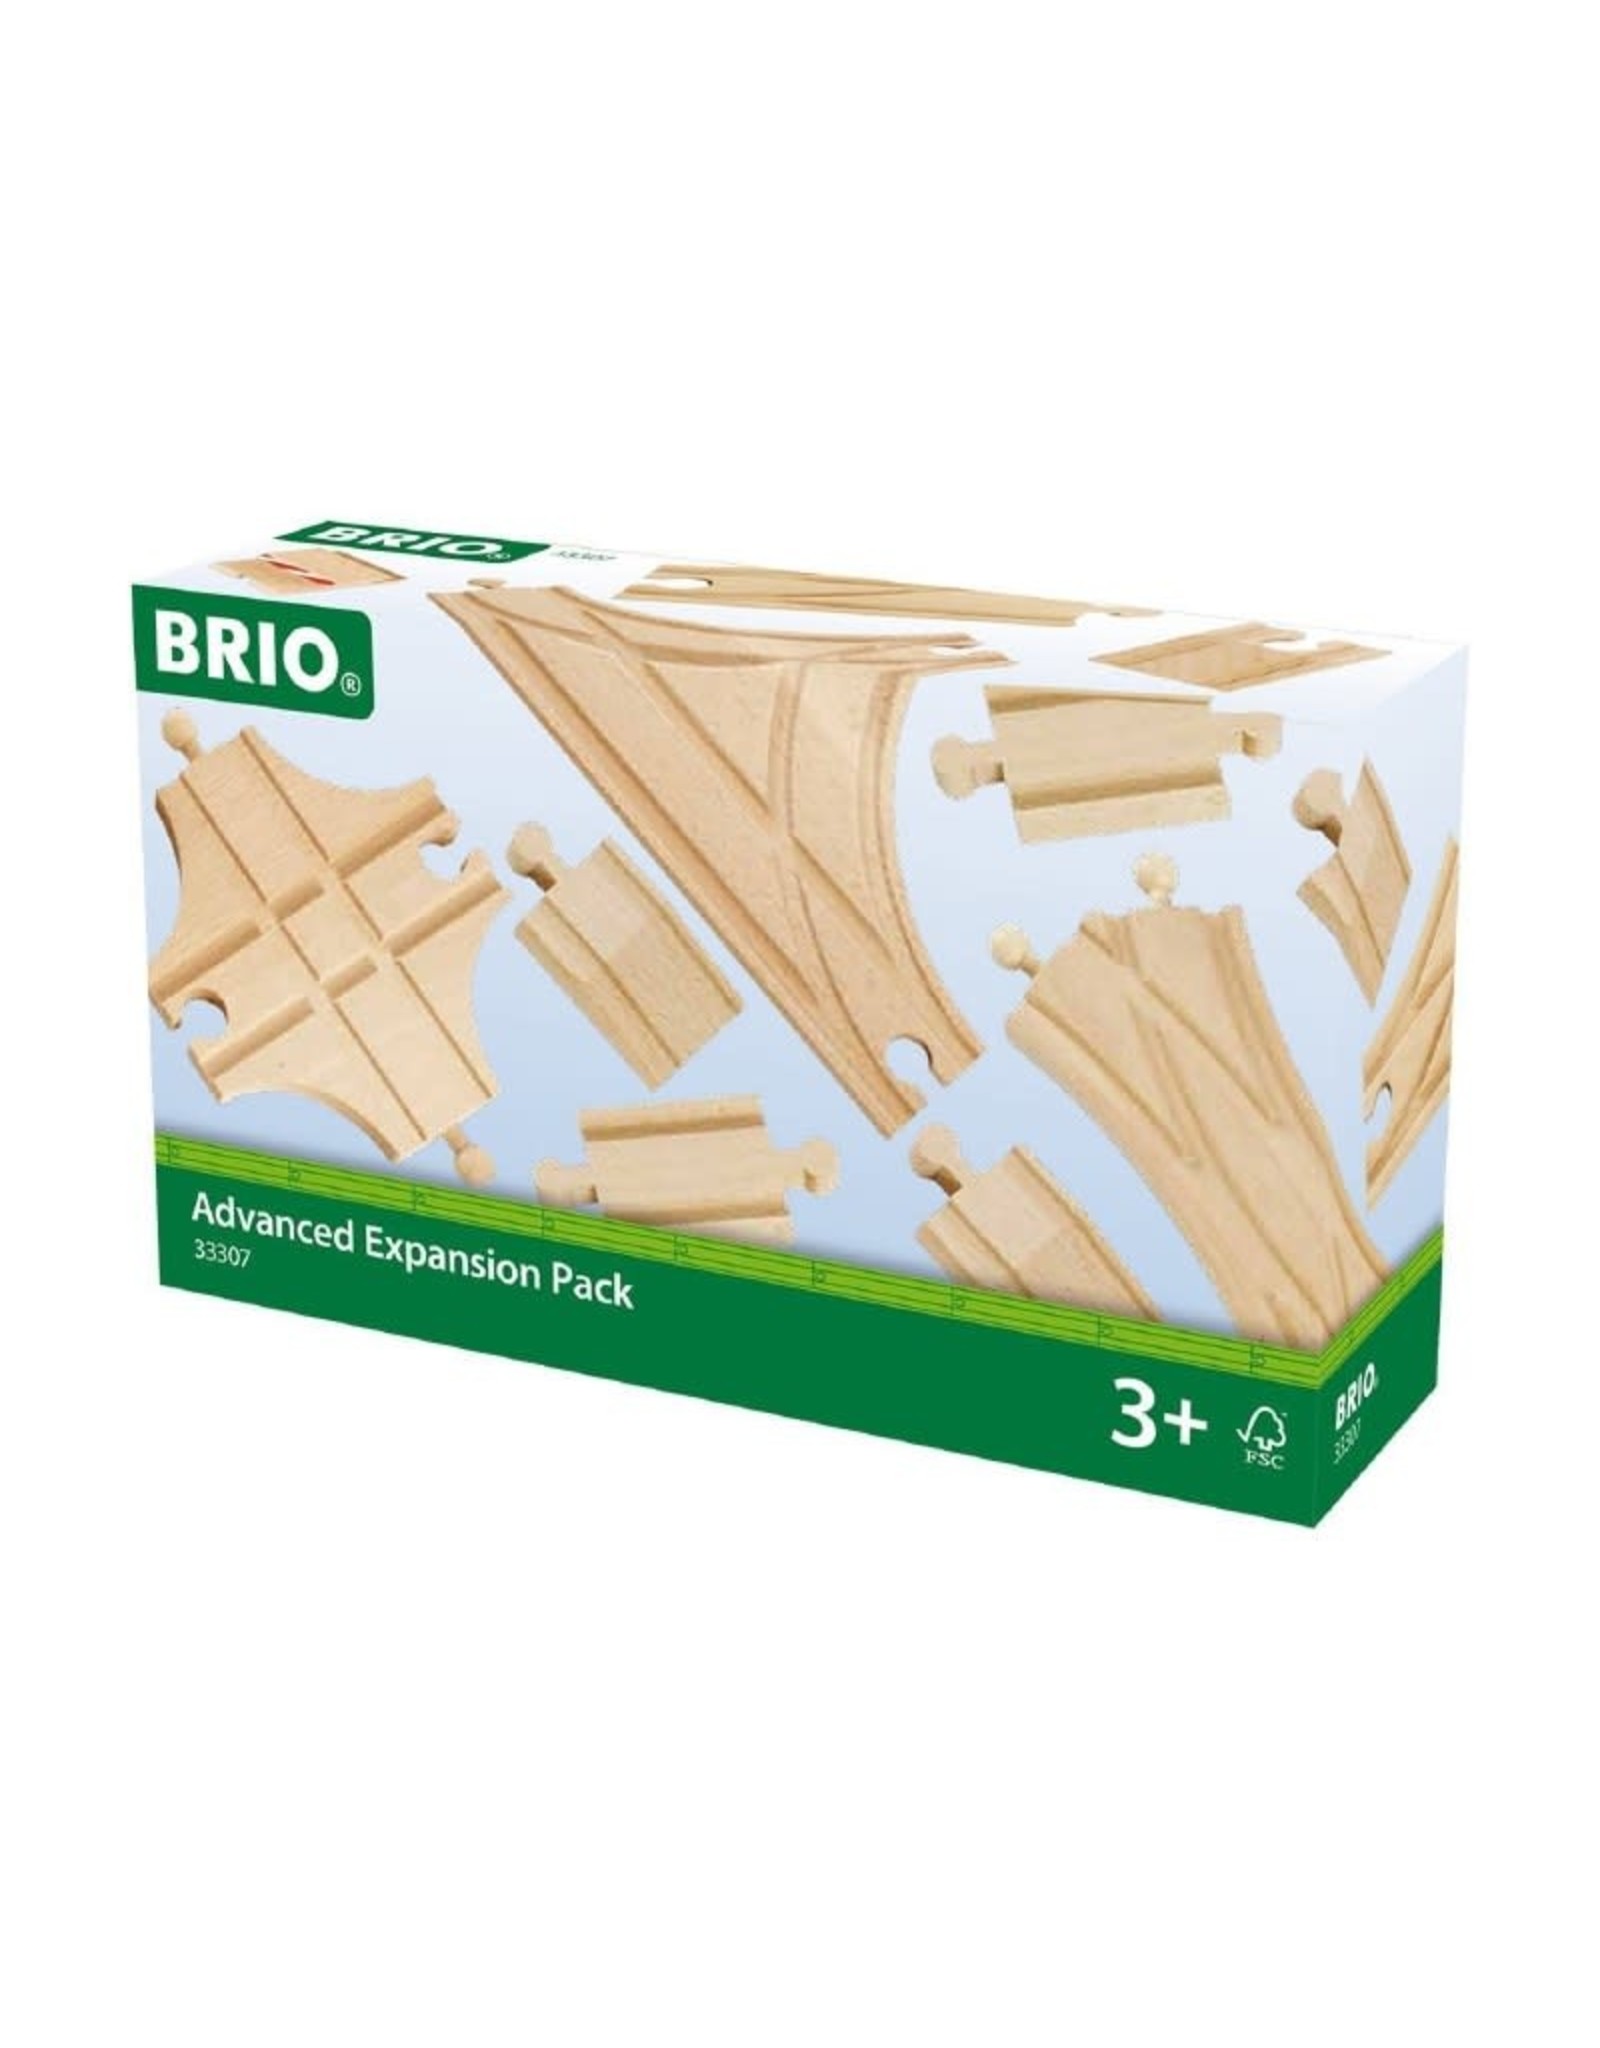 Brio BRIO Advanced Expansion Pack